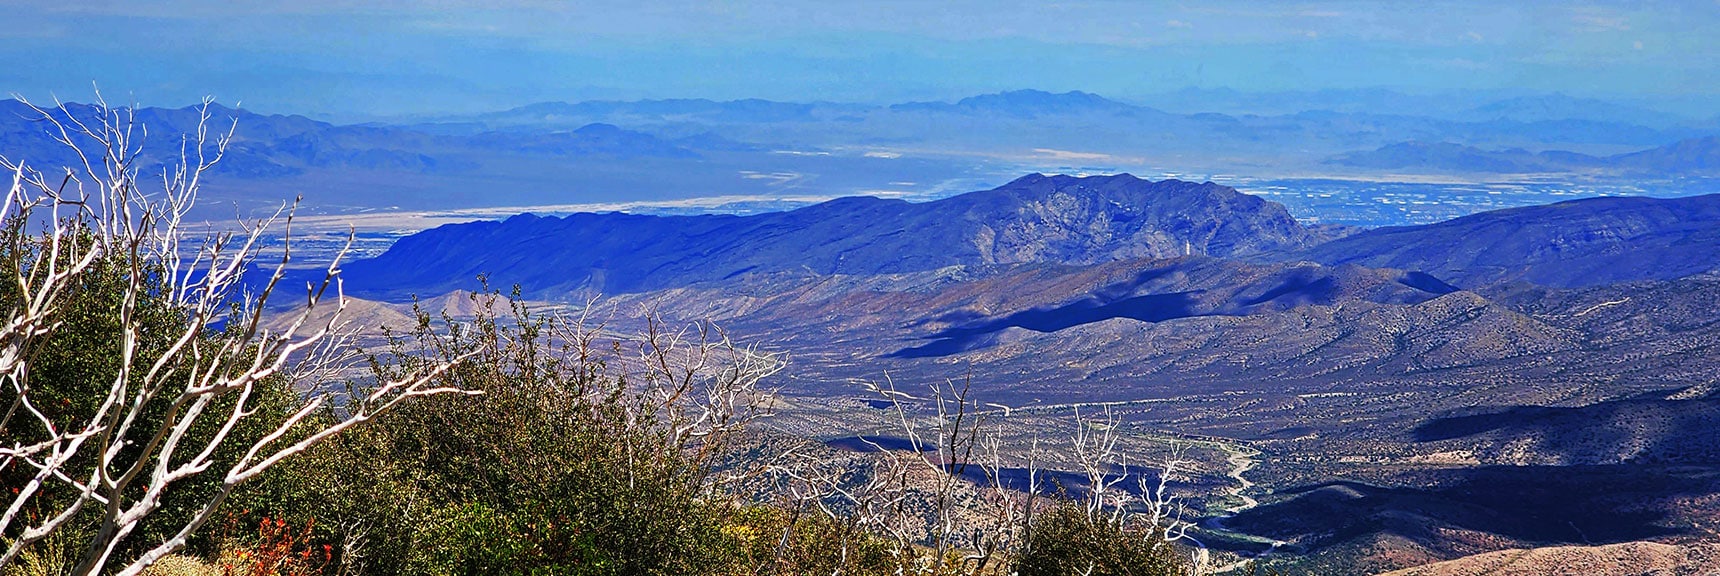 View Down Kyle Canyon Toward Las Vegas Valley and Beyond | Harris Mountain Triangle | Mt Charleston Wilderness, Nevada